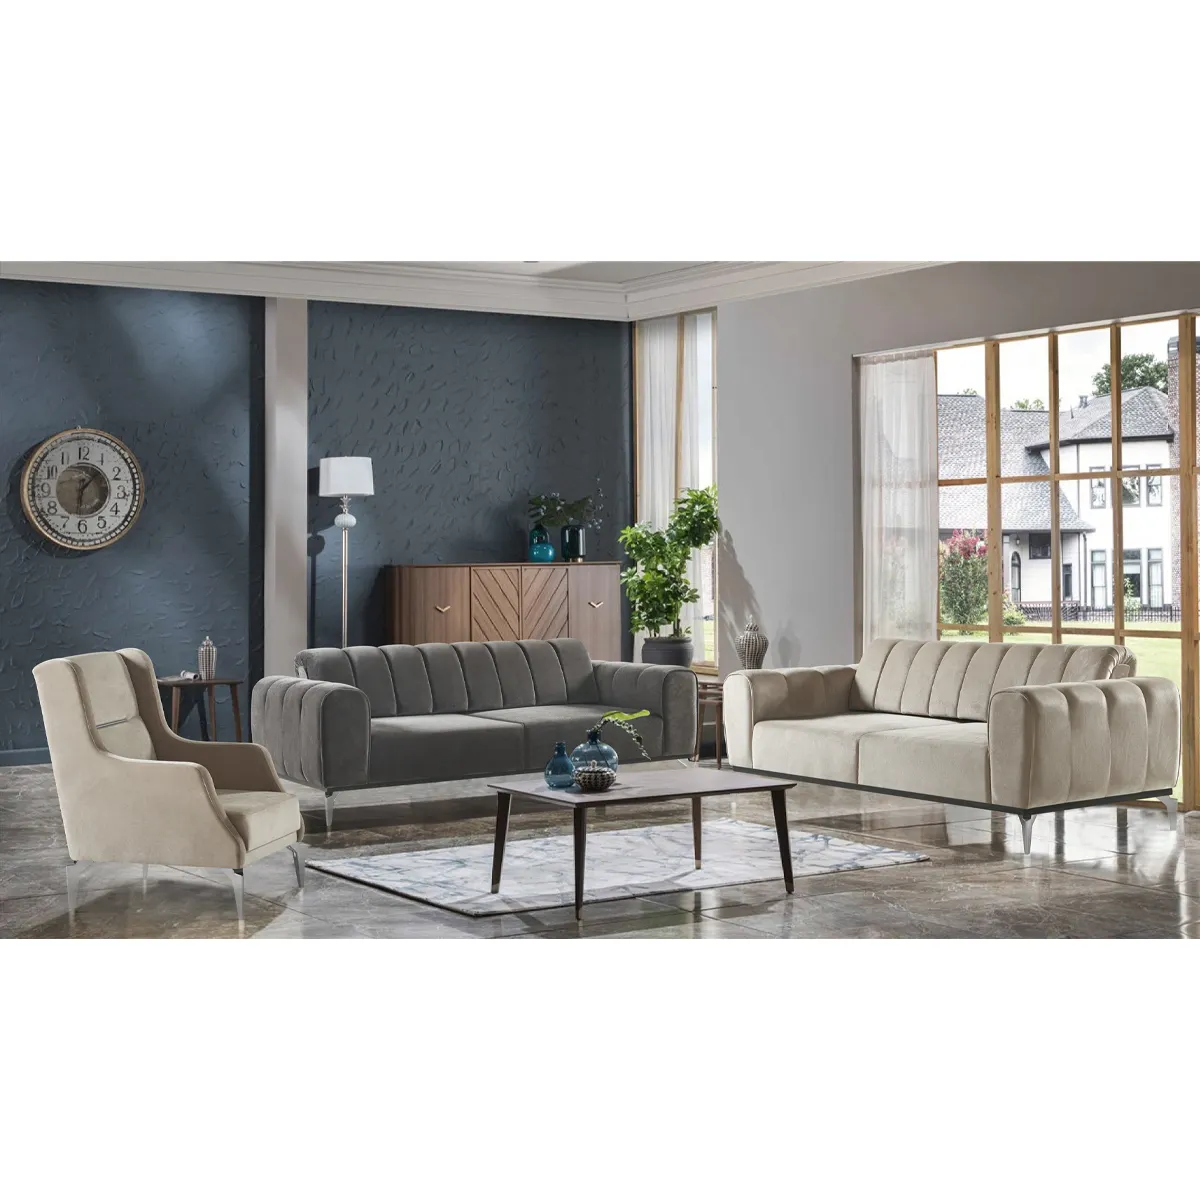 Living Room Sofa Group Sets Home Design Modern Luxury High Quality Sofa Sets Home Furniture